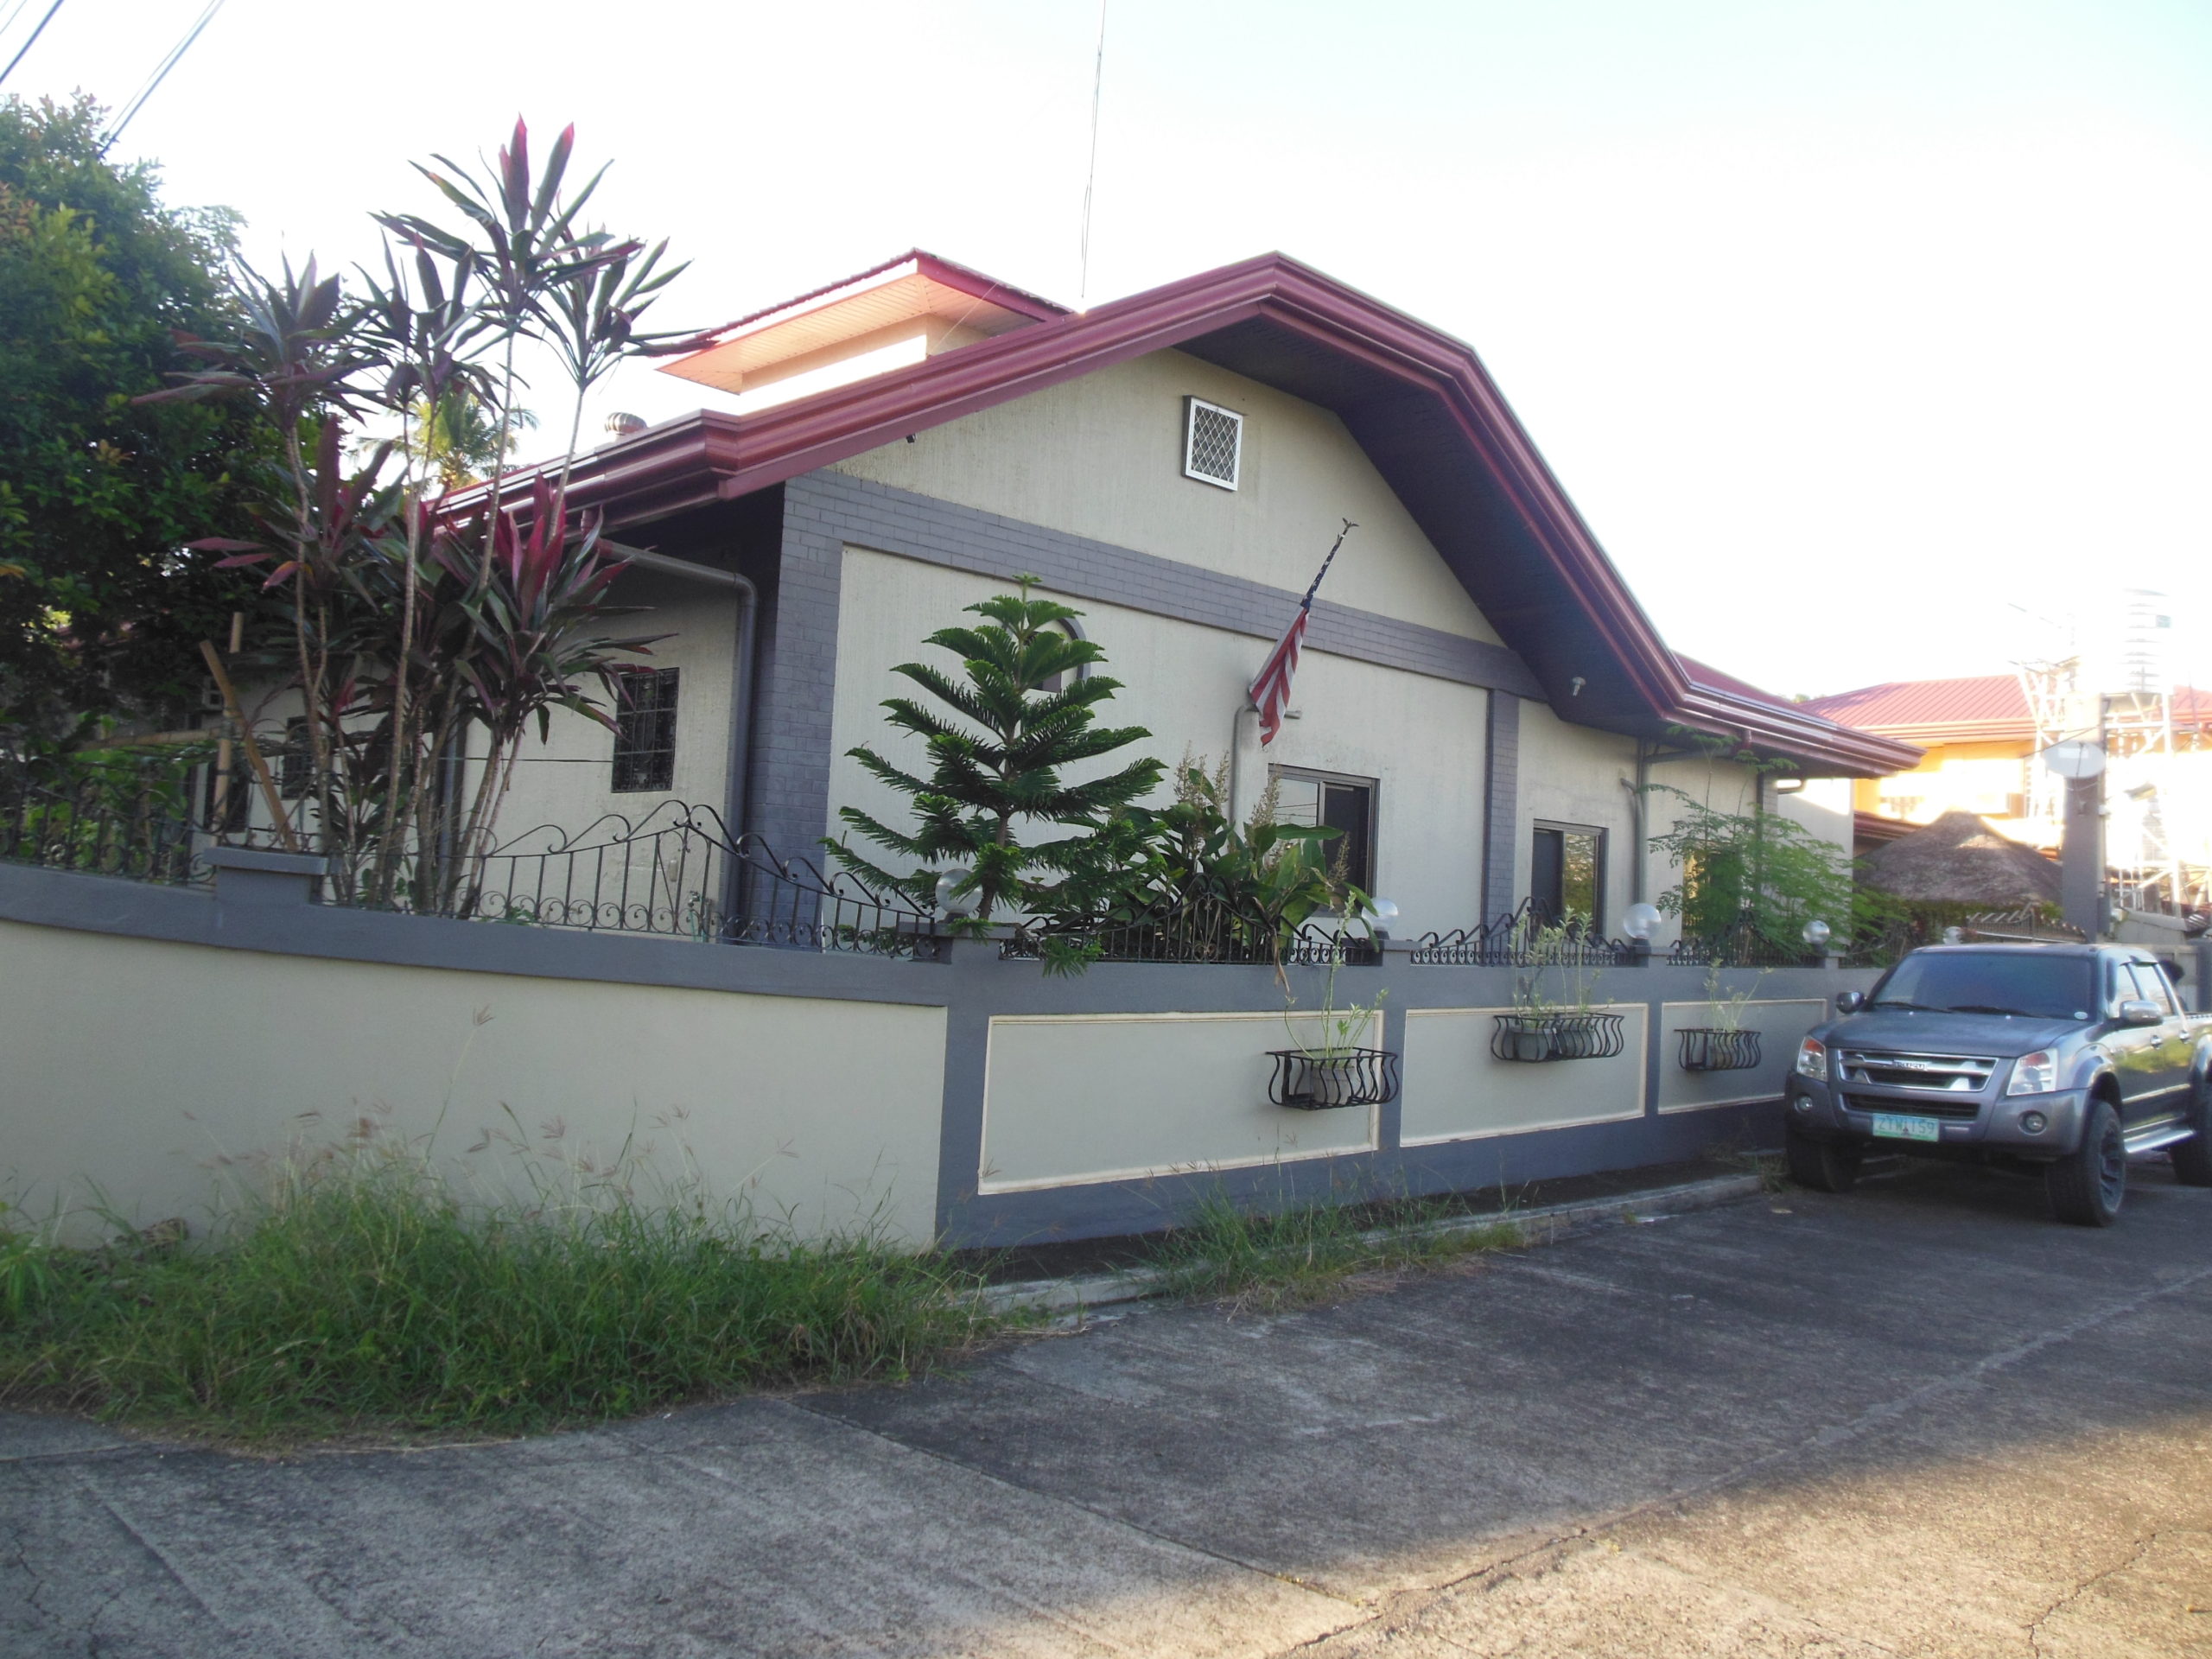 6 bedroom bungaloo at Baseview Homes, Lipa City, Batangas